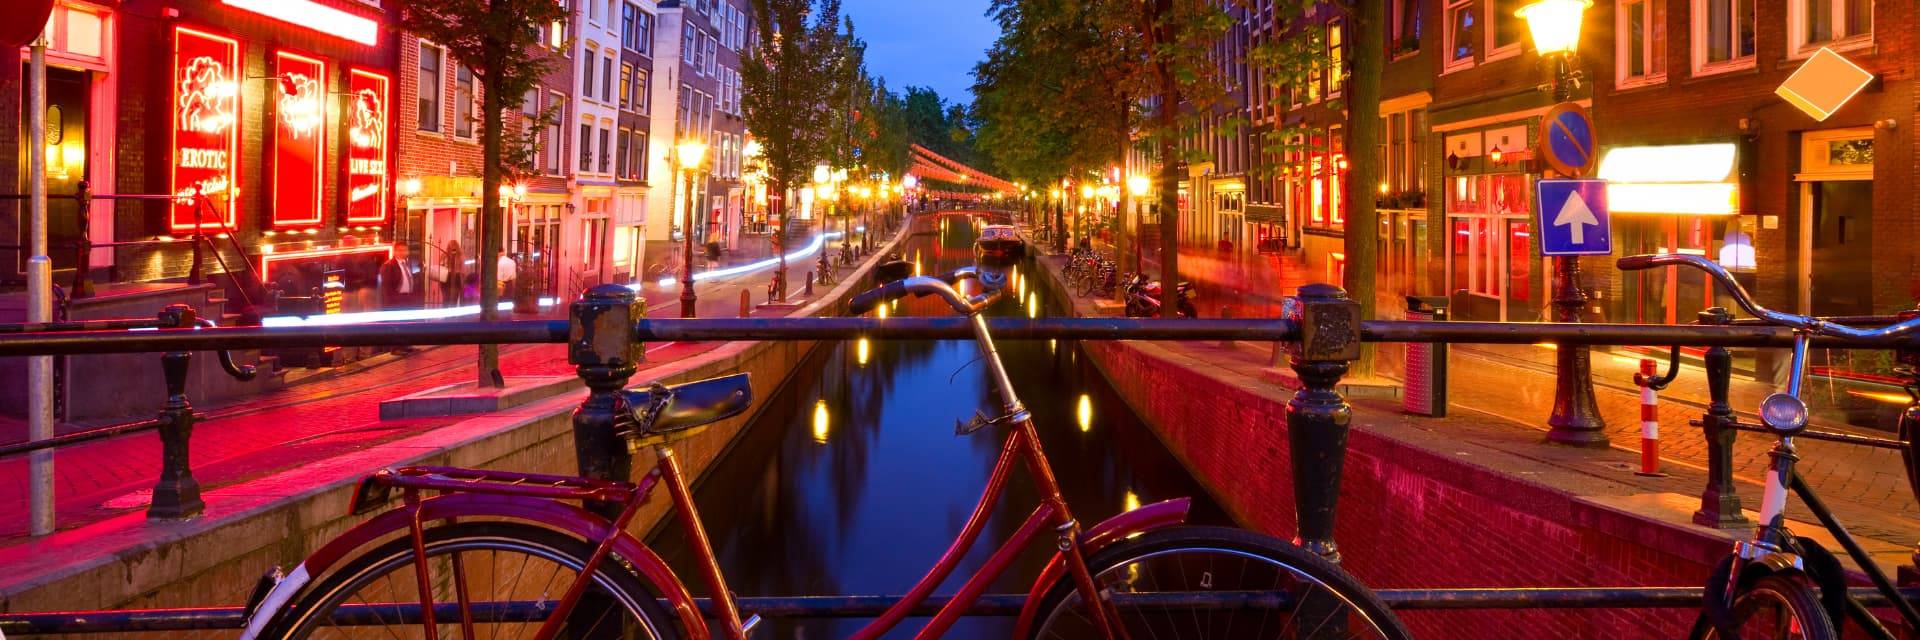 Tour por el Barrio Rojo de Ámsterdam